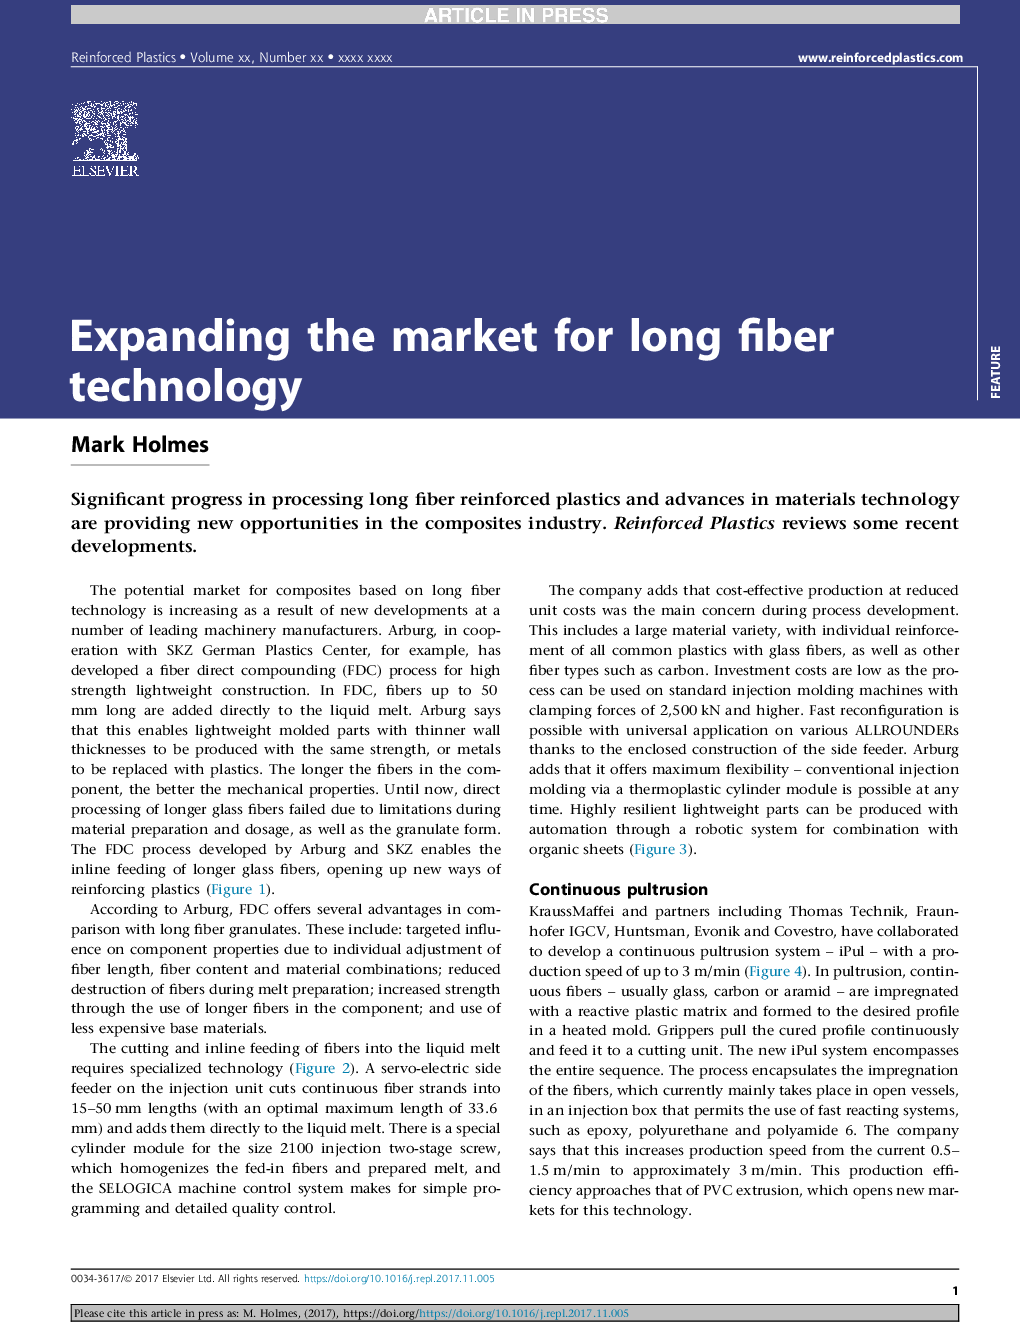 Expanding the market for long fiber technology